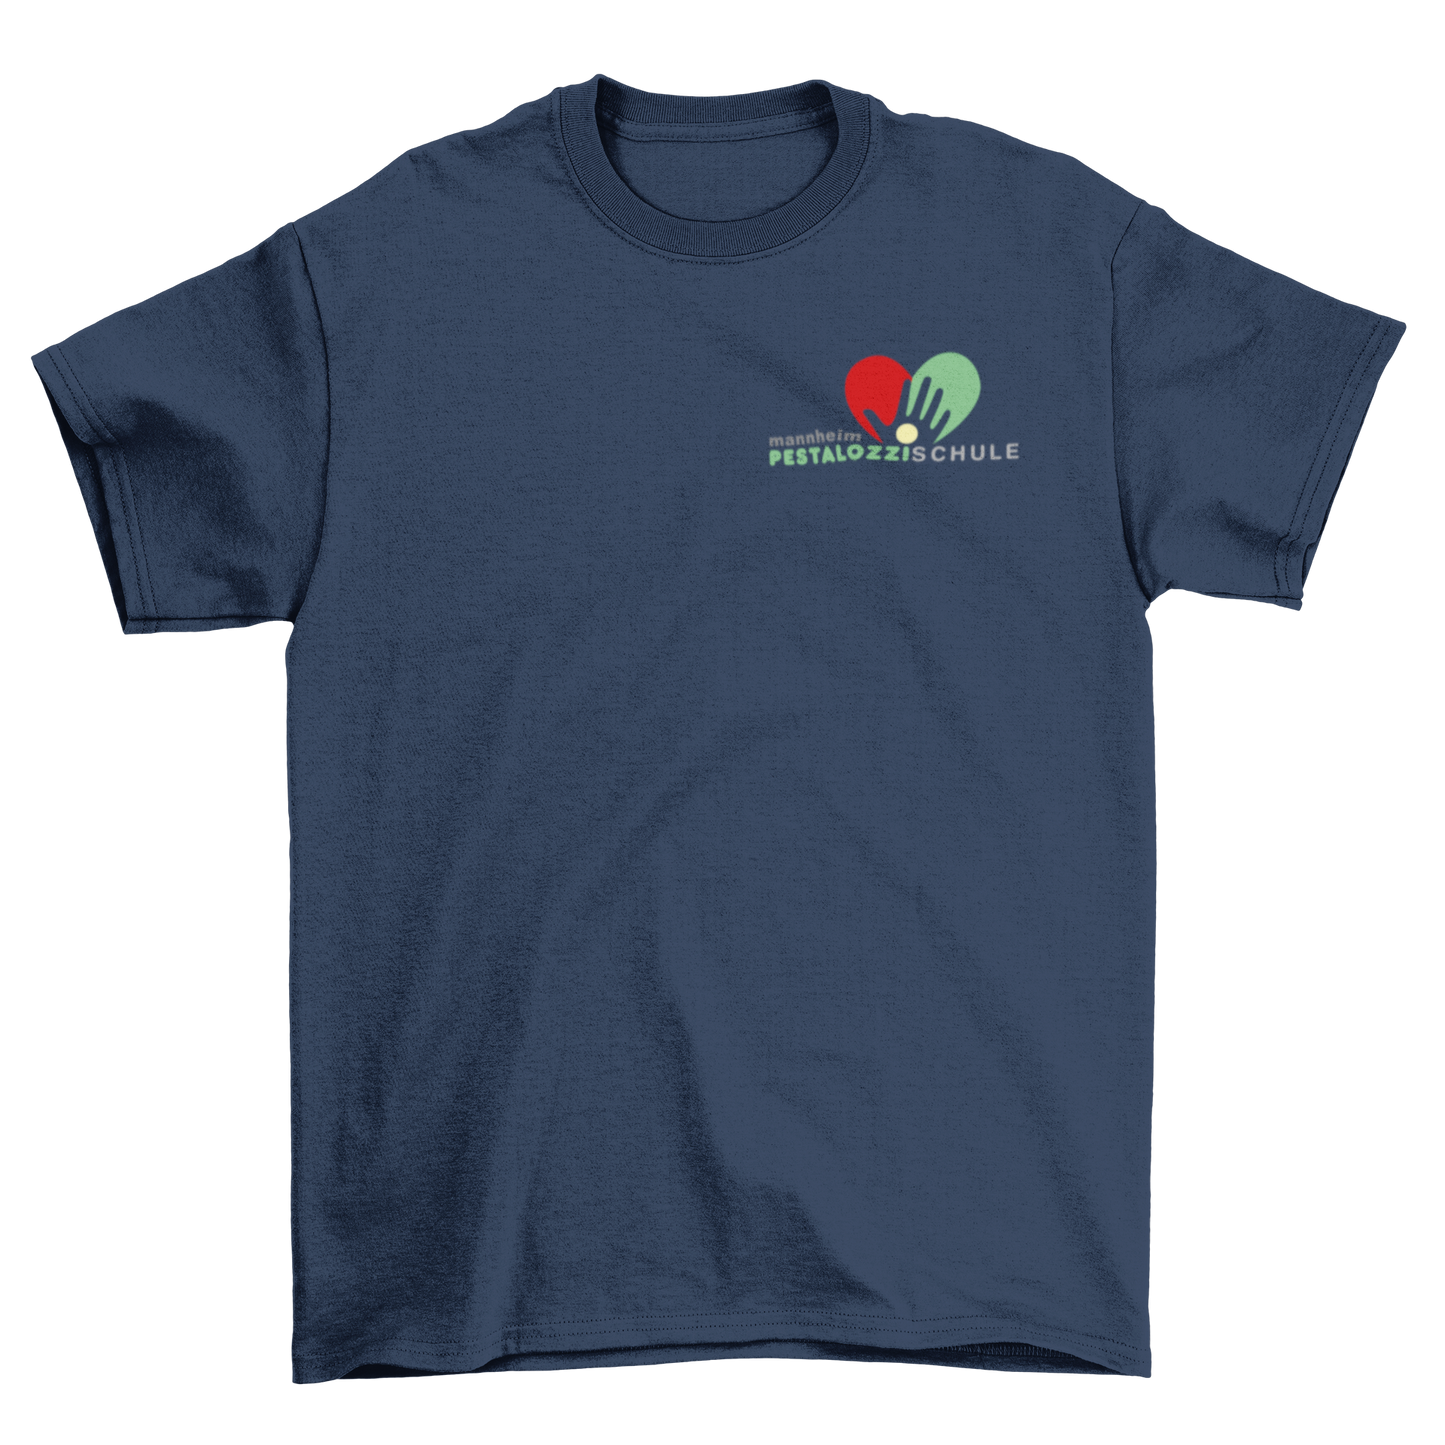 Pestalozzischule - Organic T-Shirt - SH